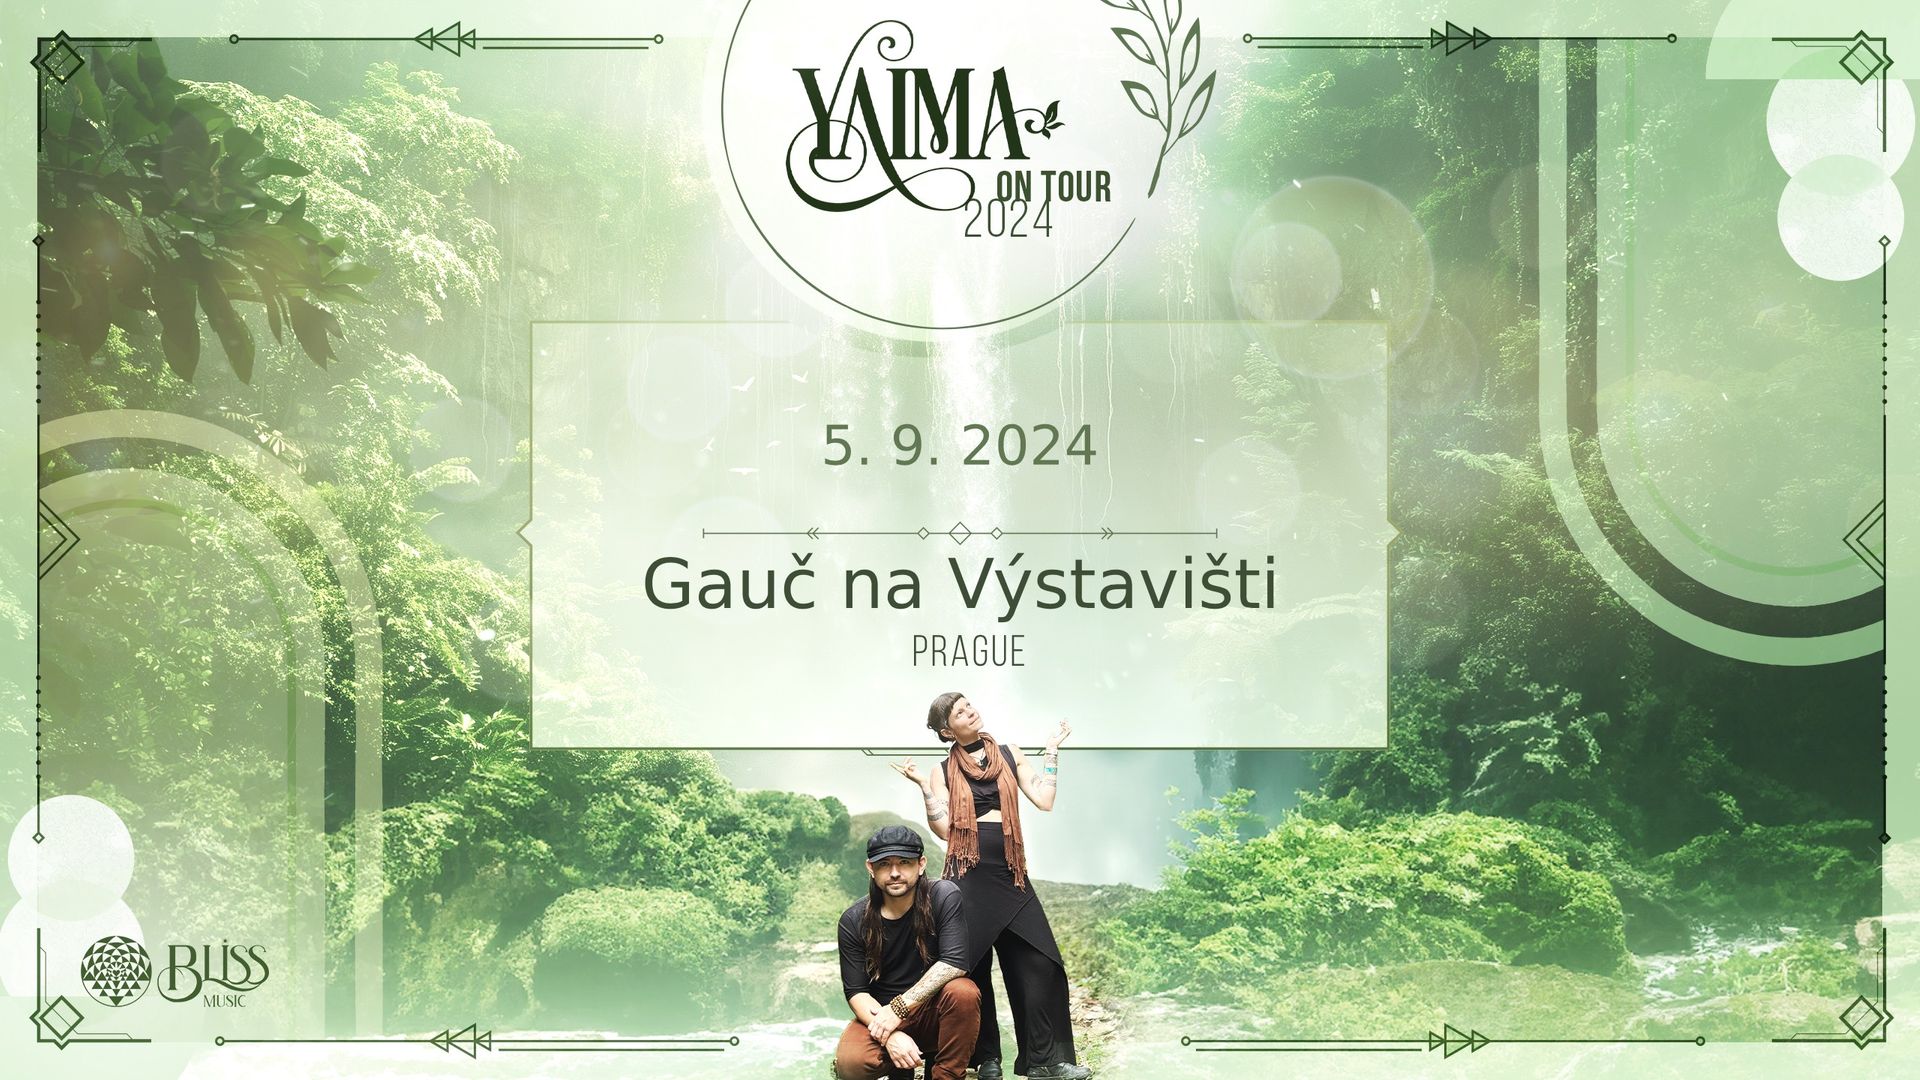 4a0efcd0-yaima-2024-tour-event-cover-template.jpeg